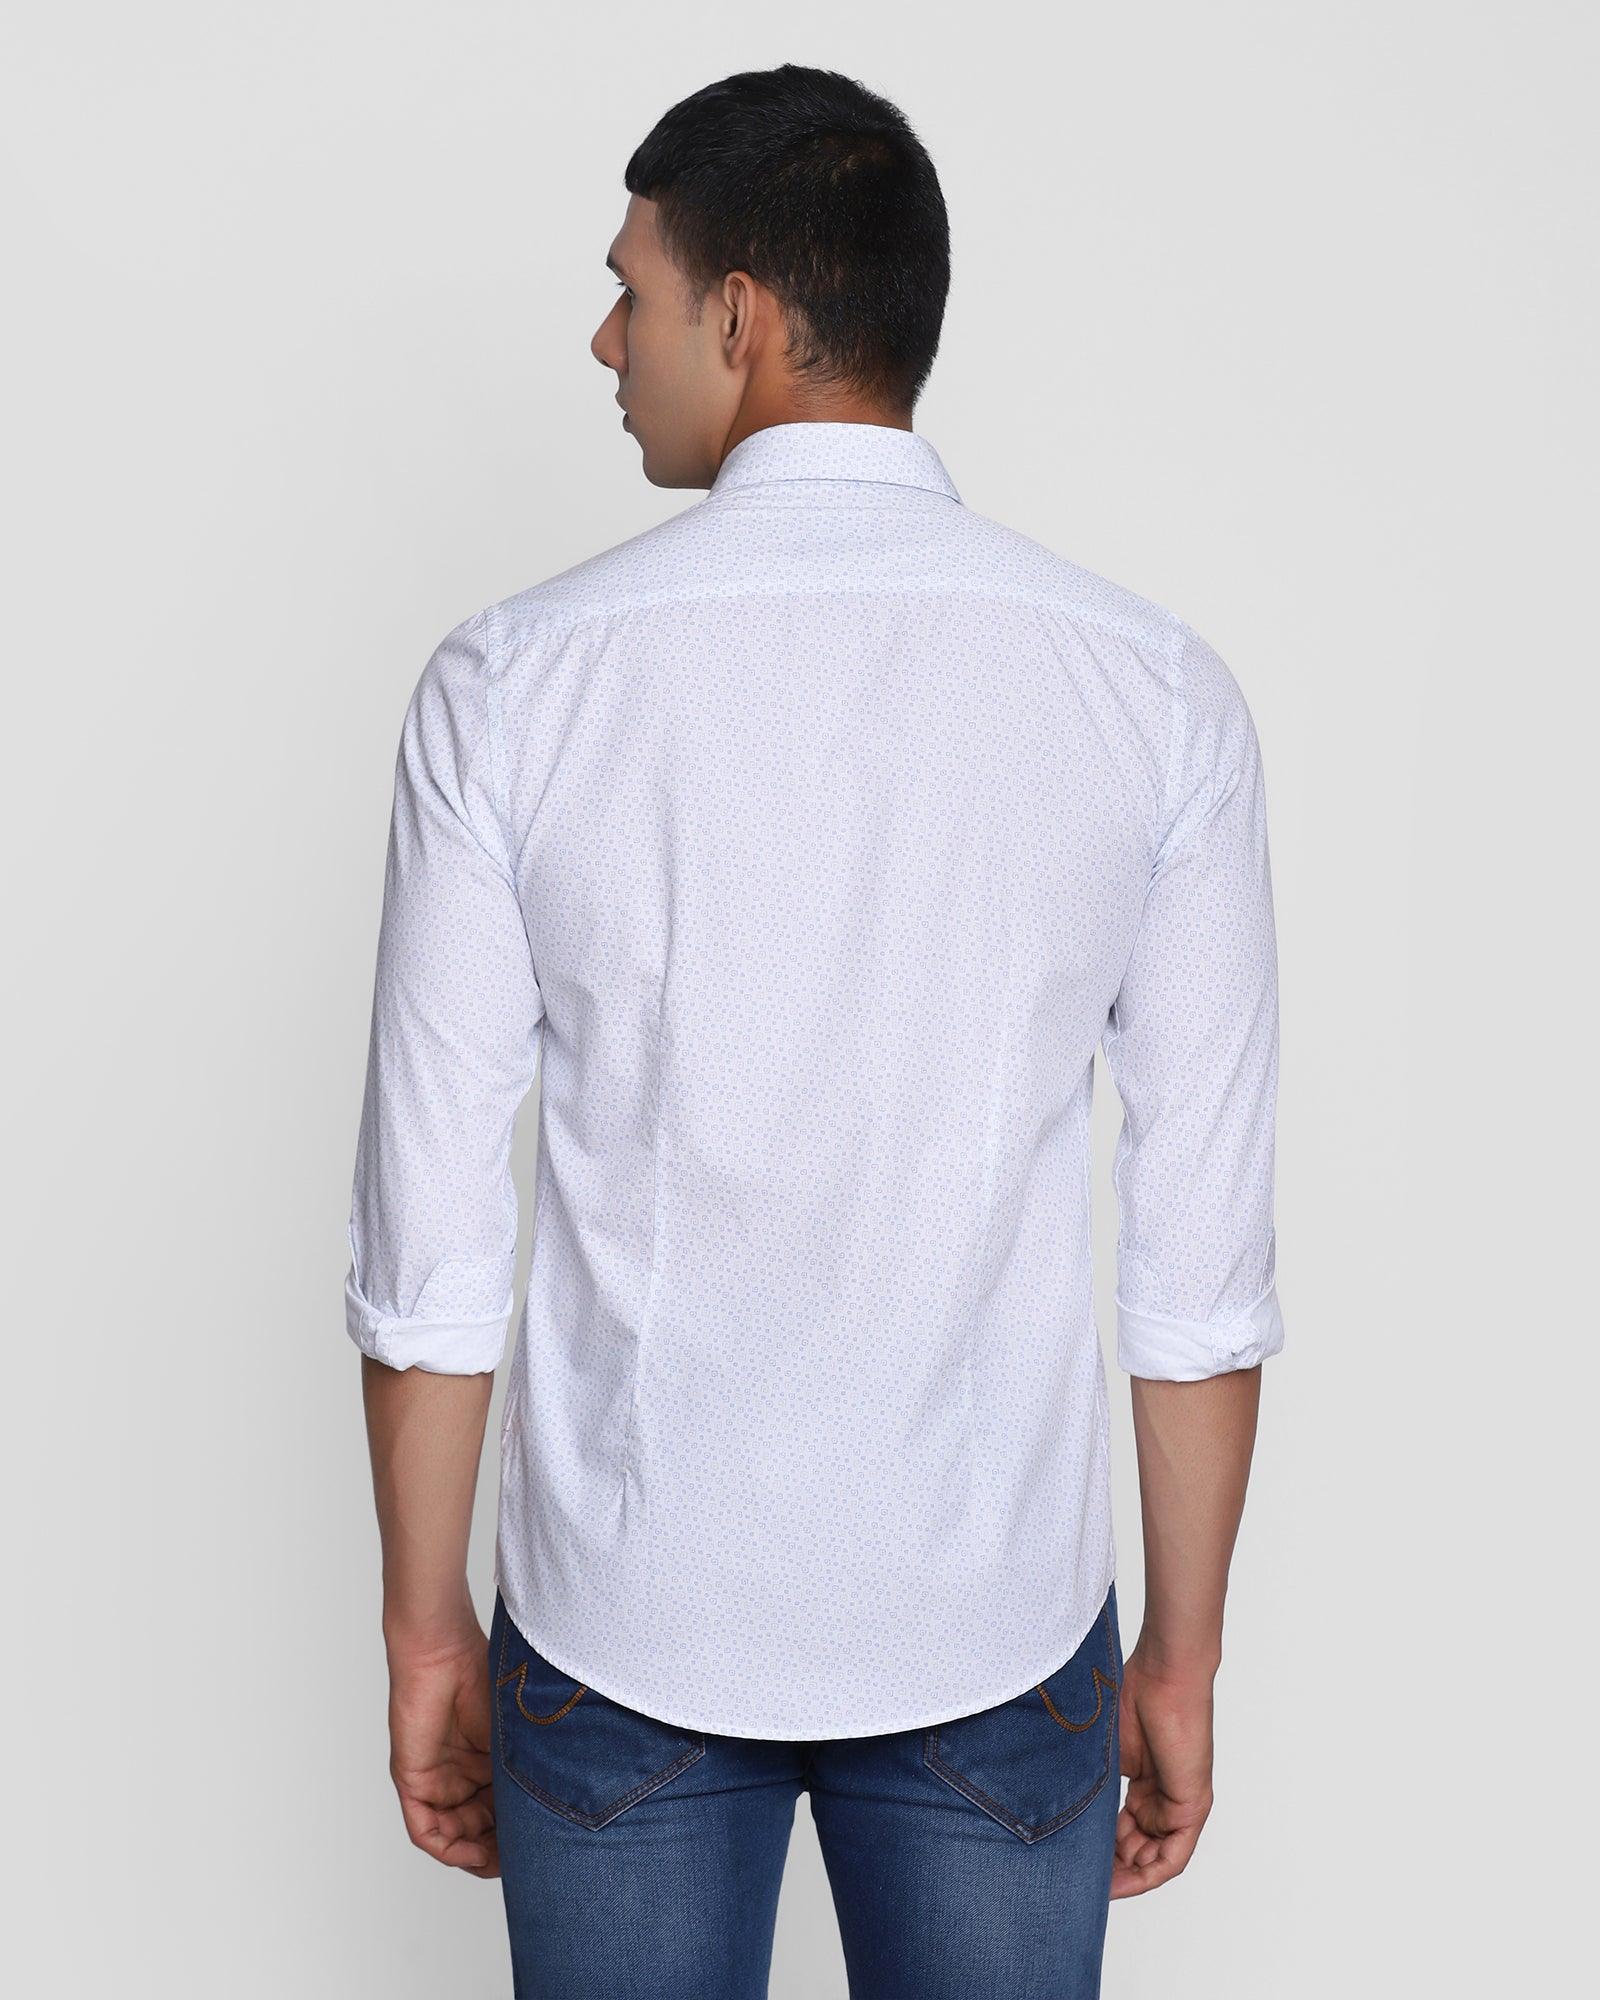 New Look short sleeve denim shirt in light blue | ASOS